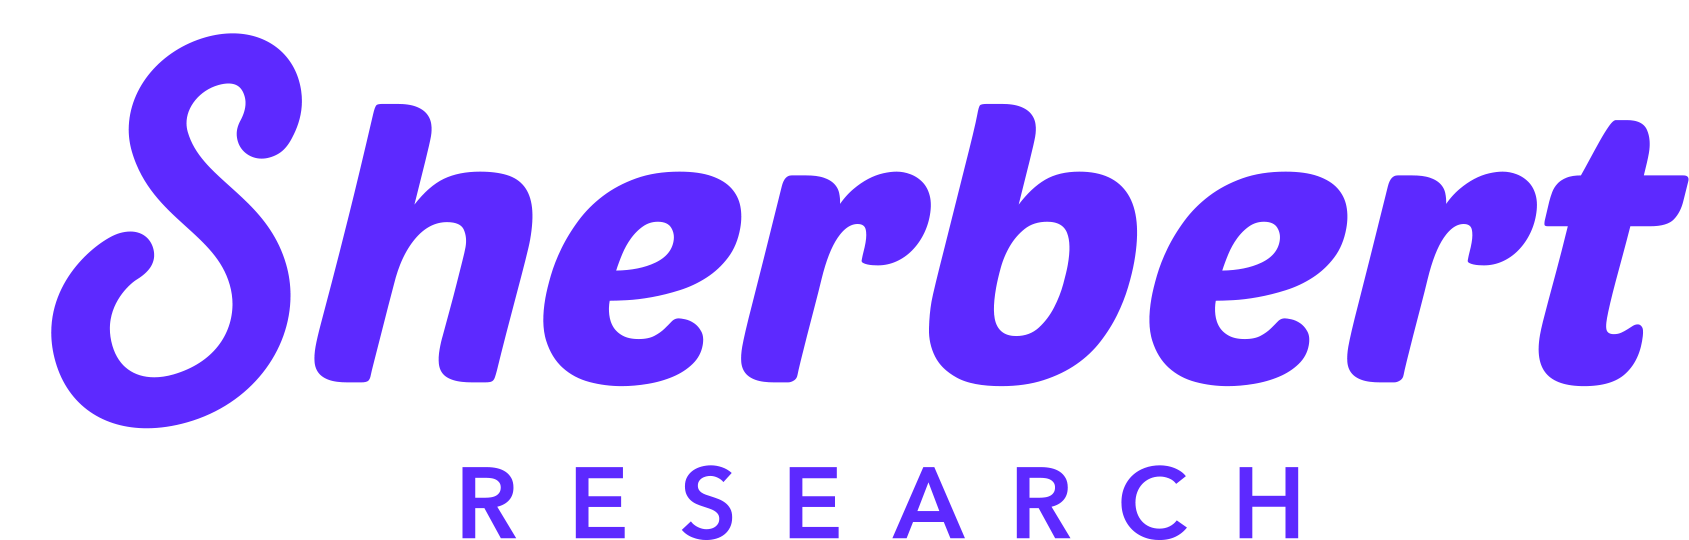 Sherbert Research